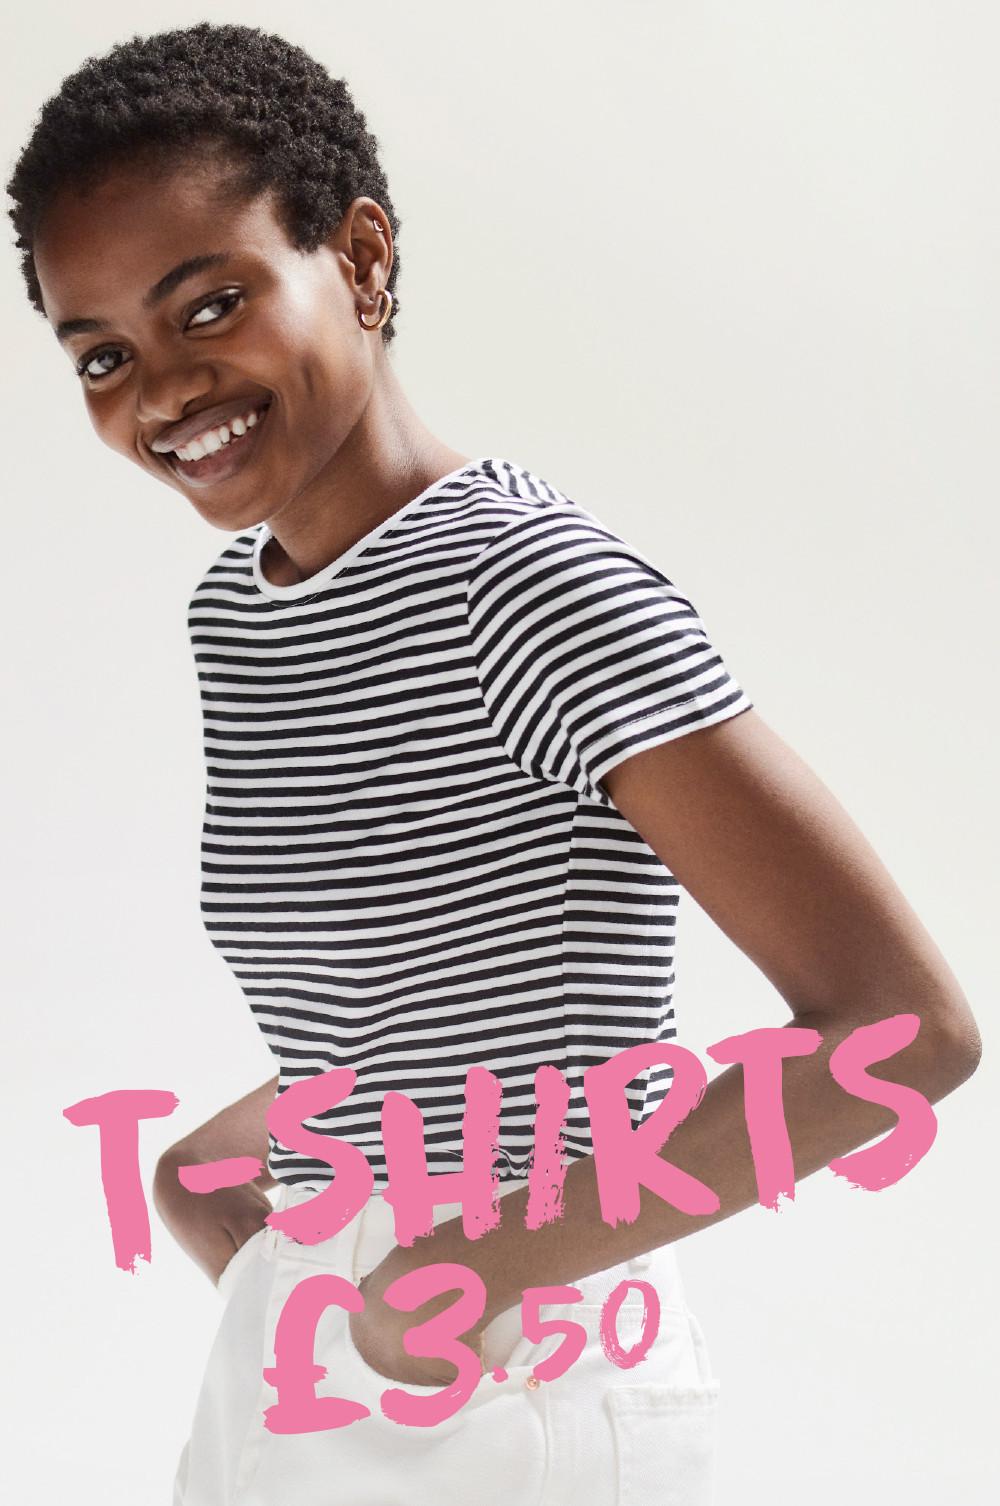 Woman wearing striped t-shirt